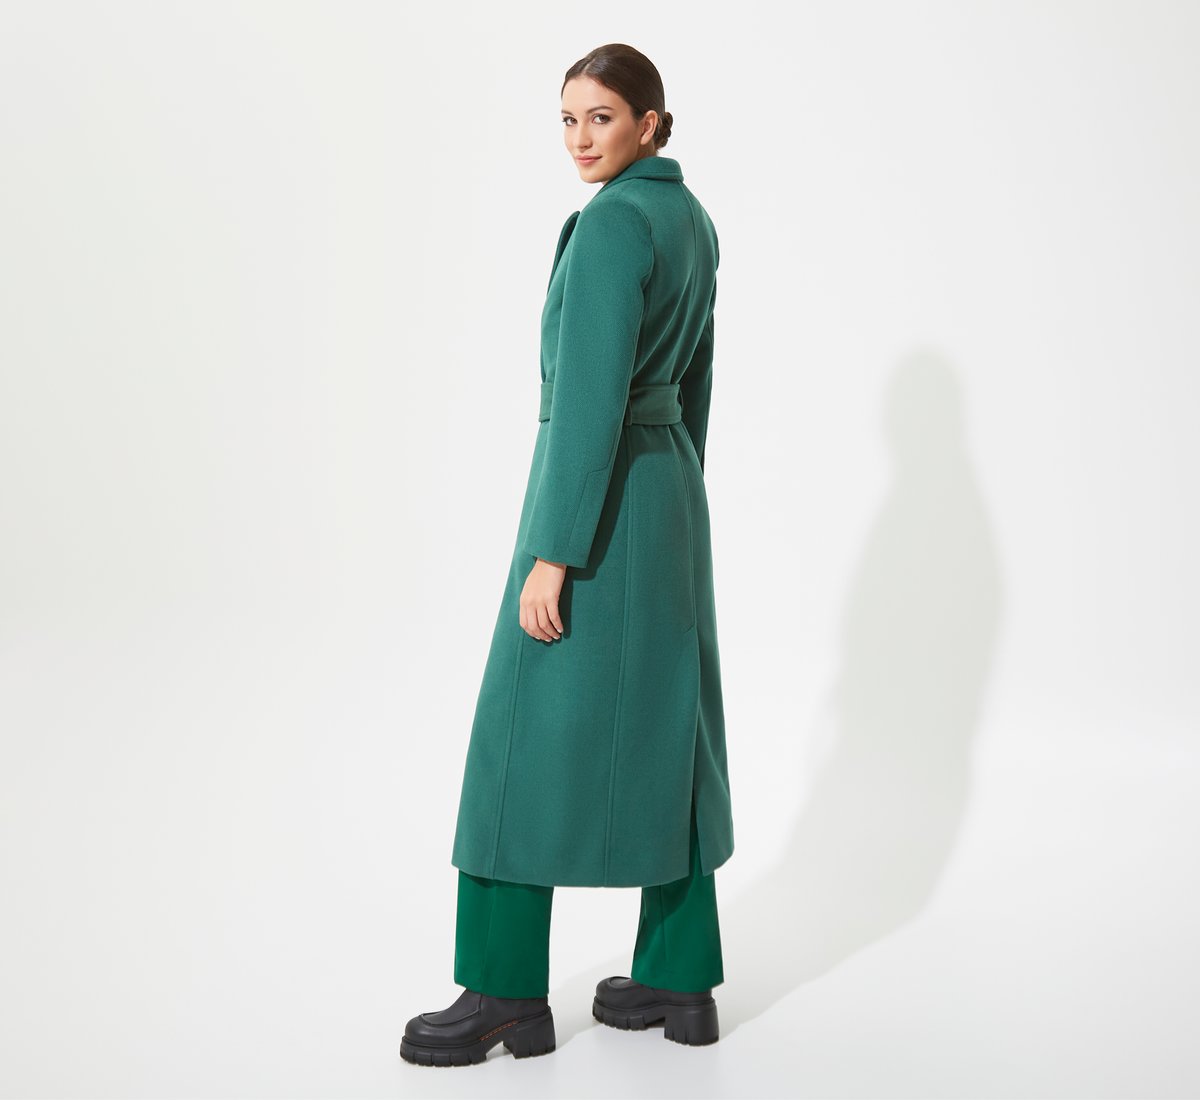 Long green coat with belt